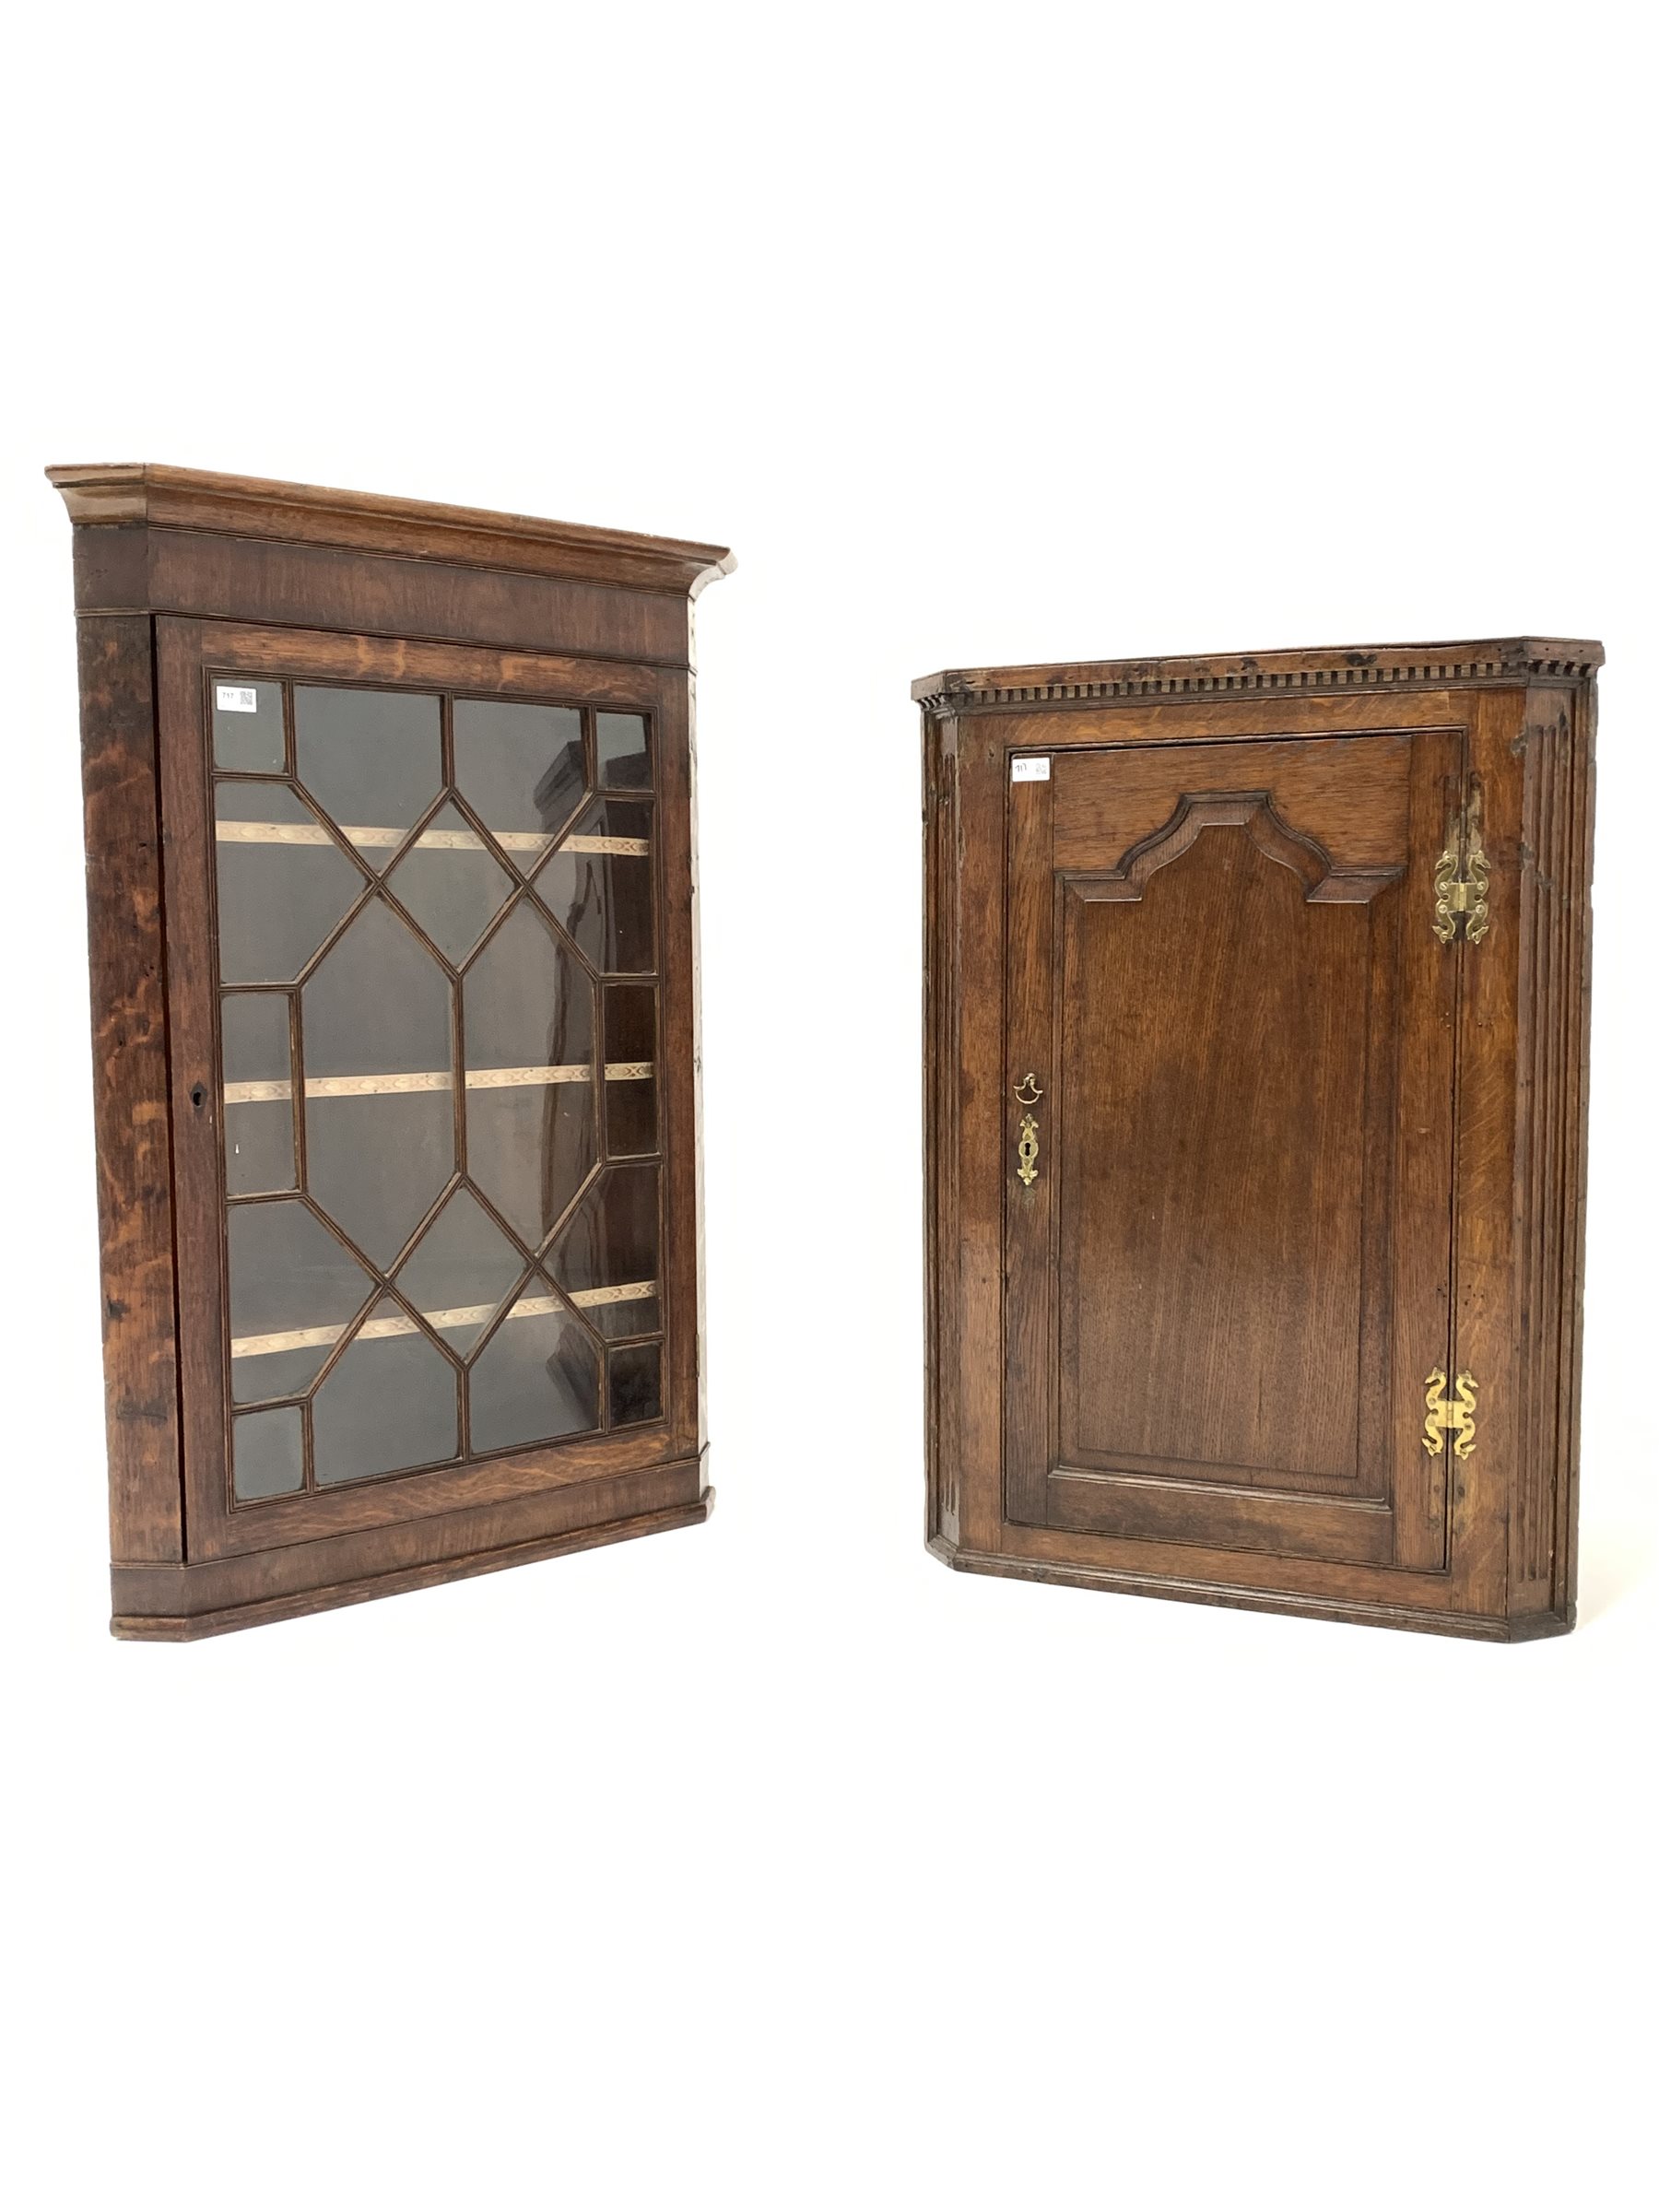 George III oak and mahogany corner cupboard, with astragal glazed door enclosing three shelves, (W78